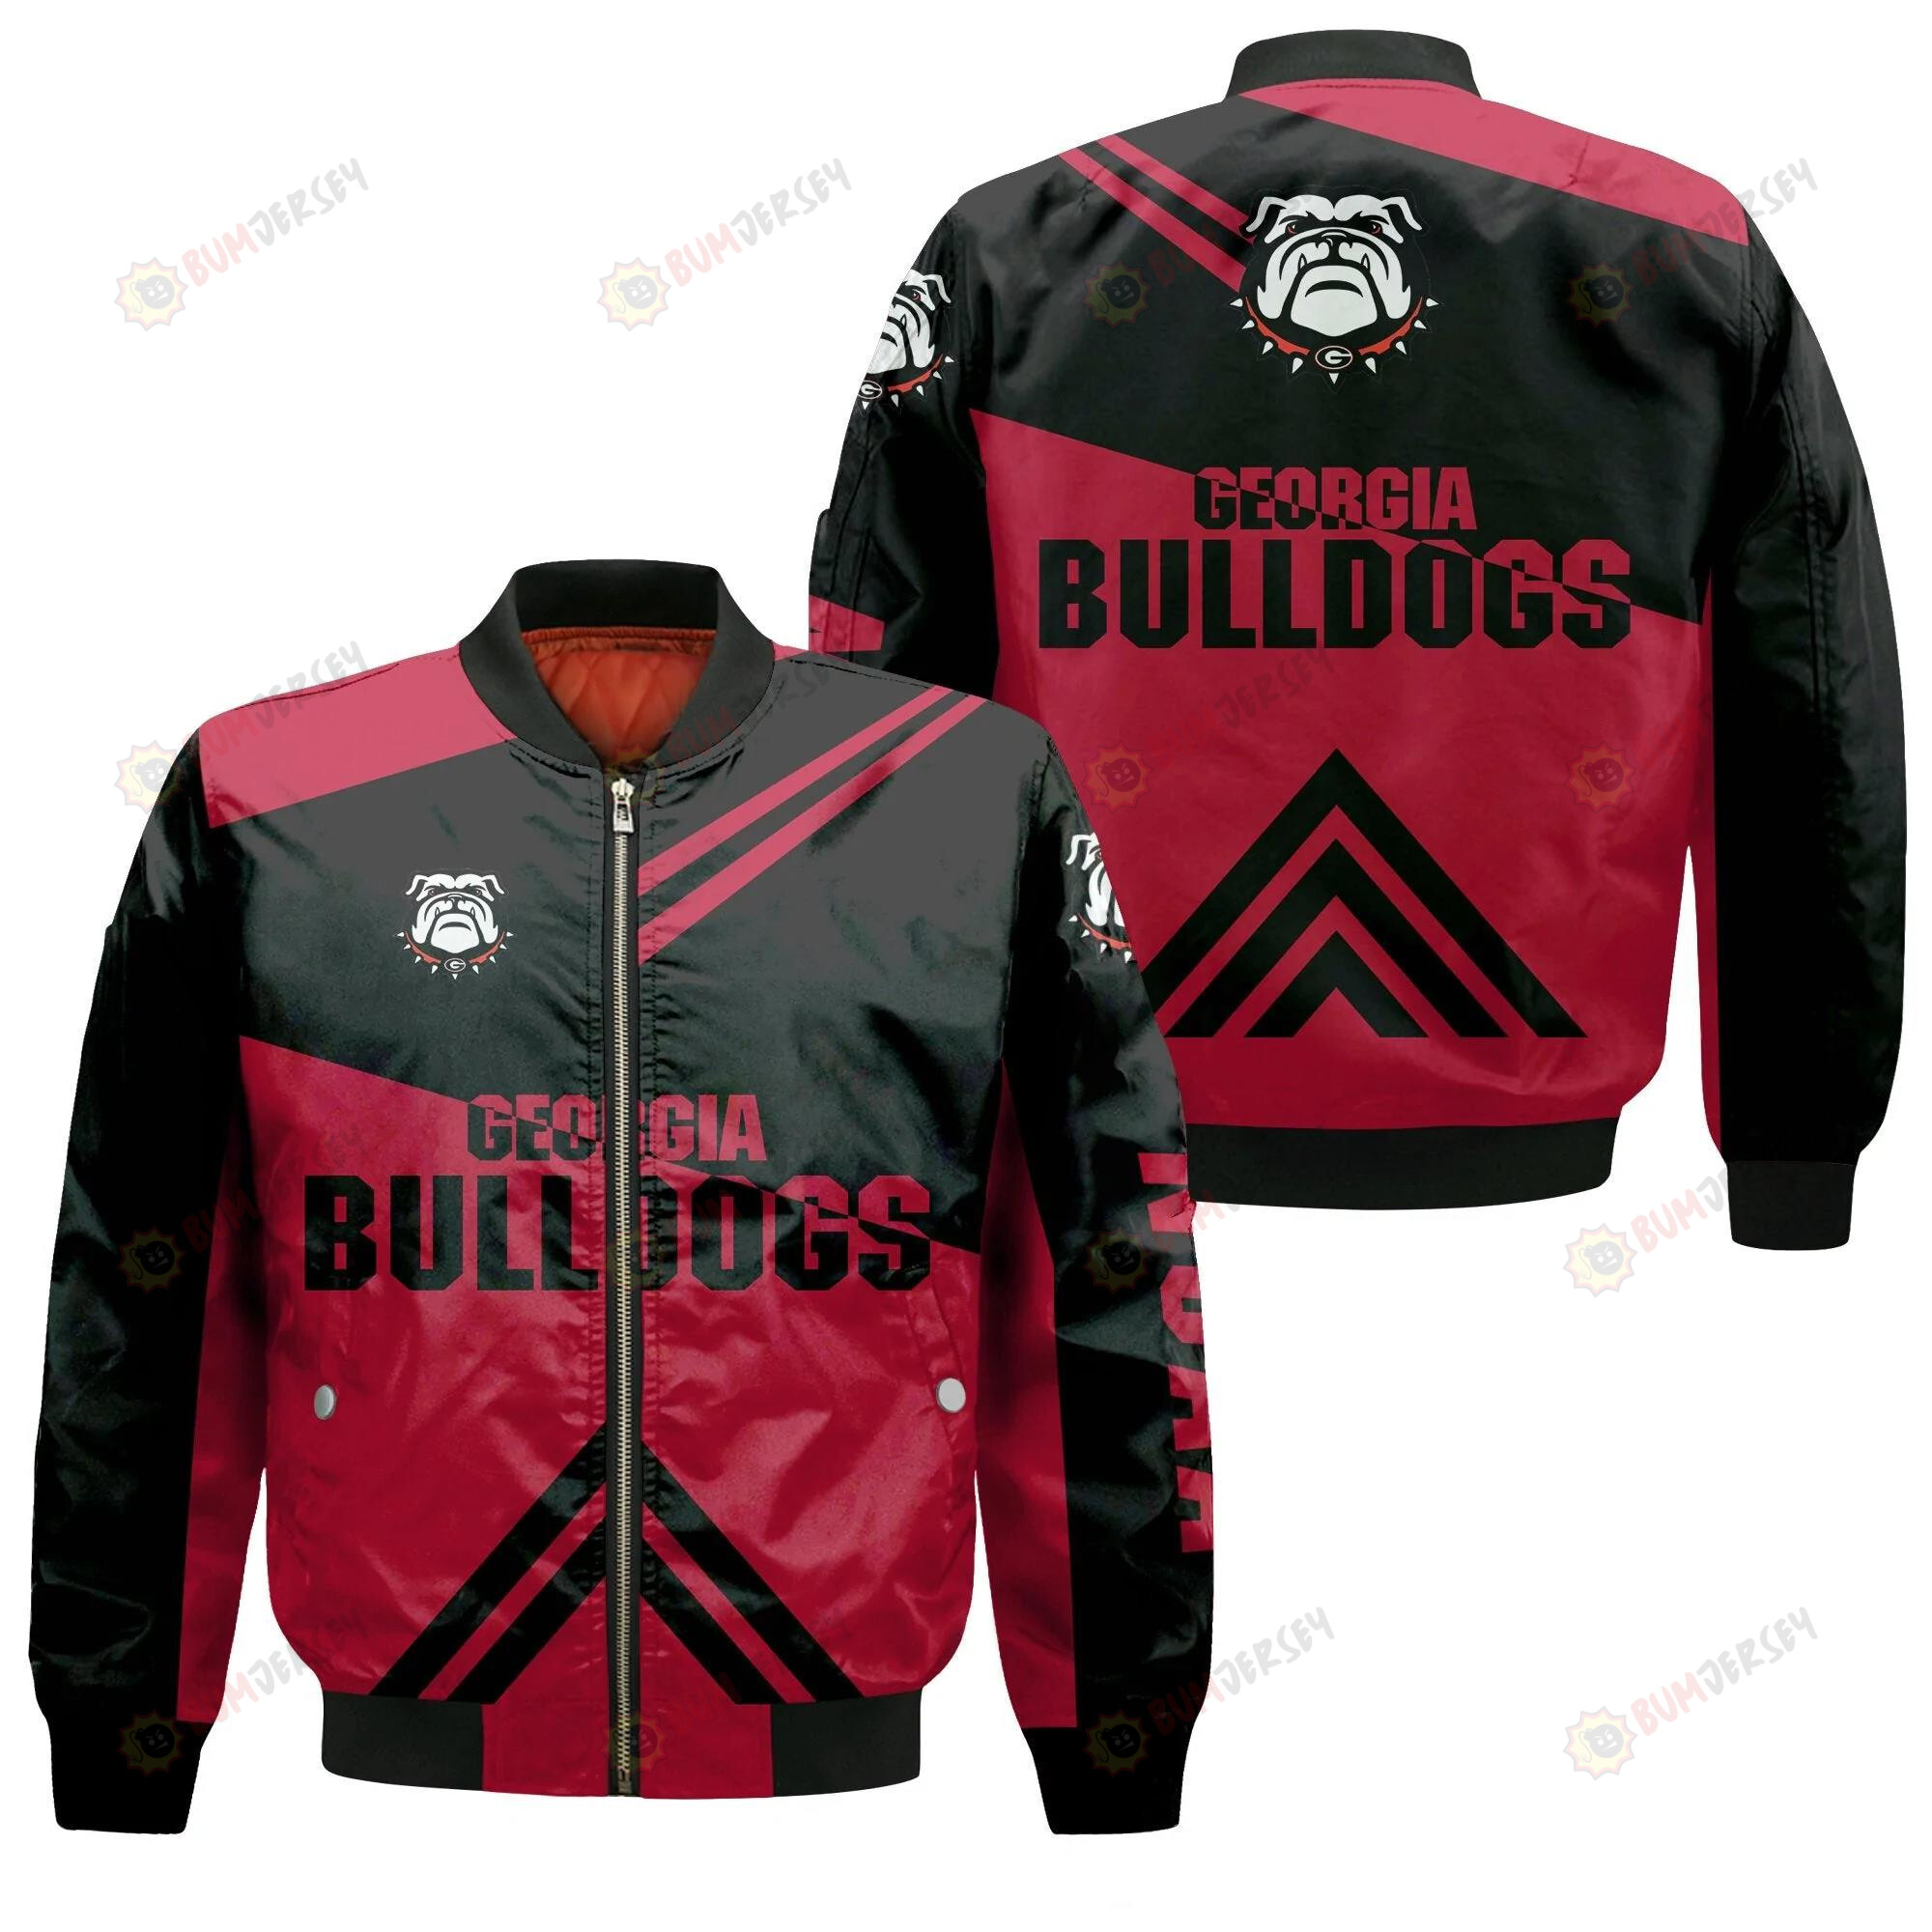 Georgia Bulldogs Football Bomber Jacket 3D Printed - Stripes Cross Shoulders